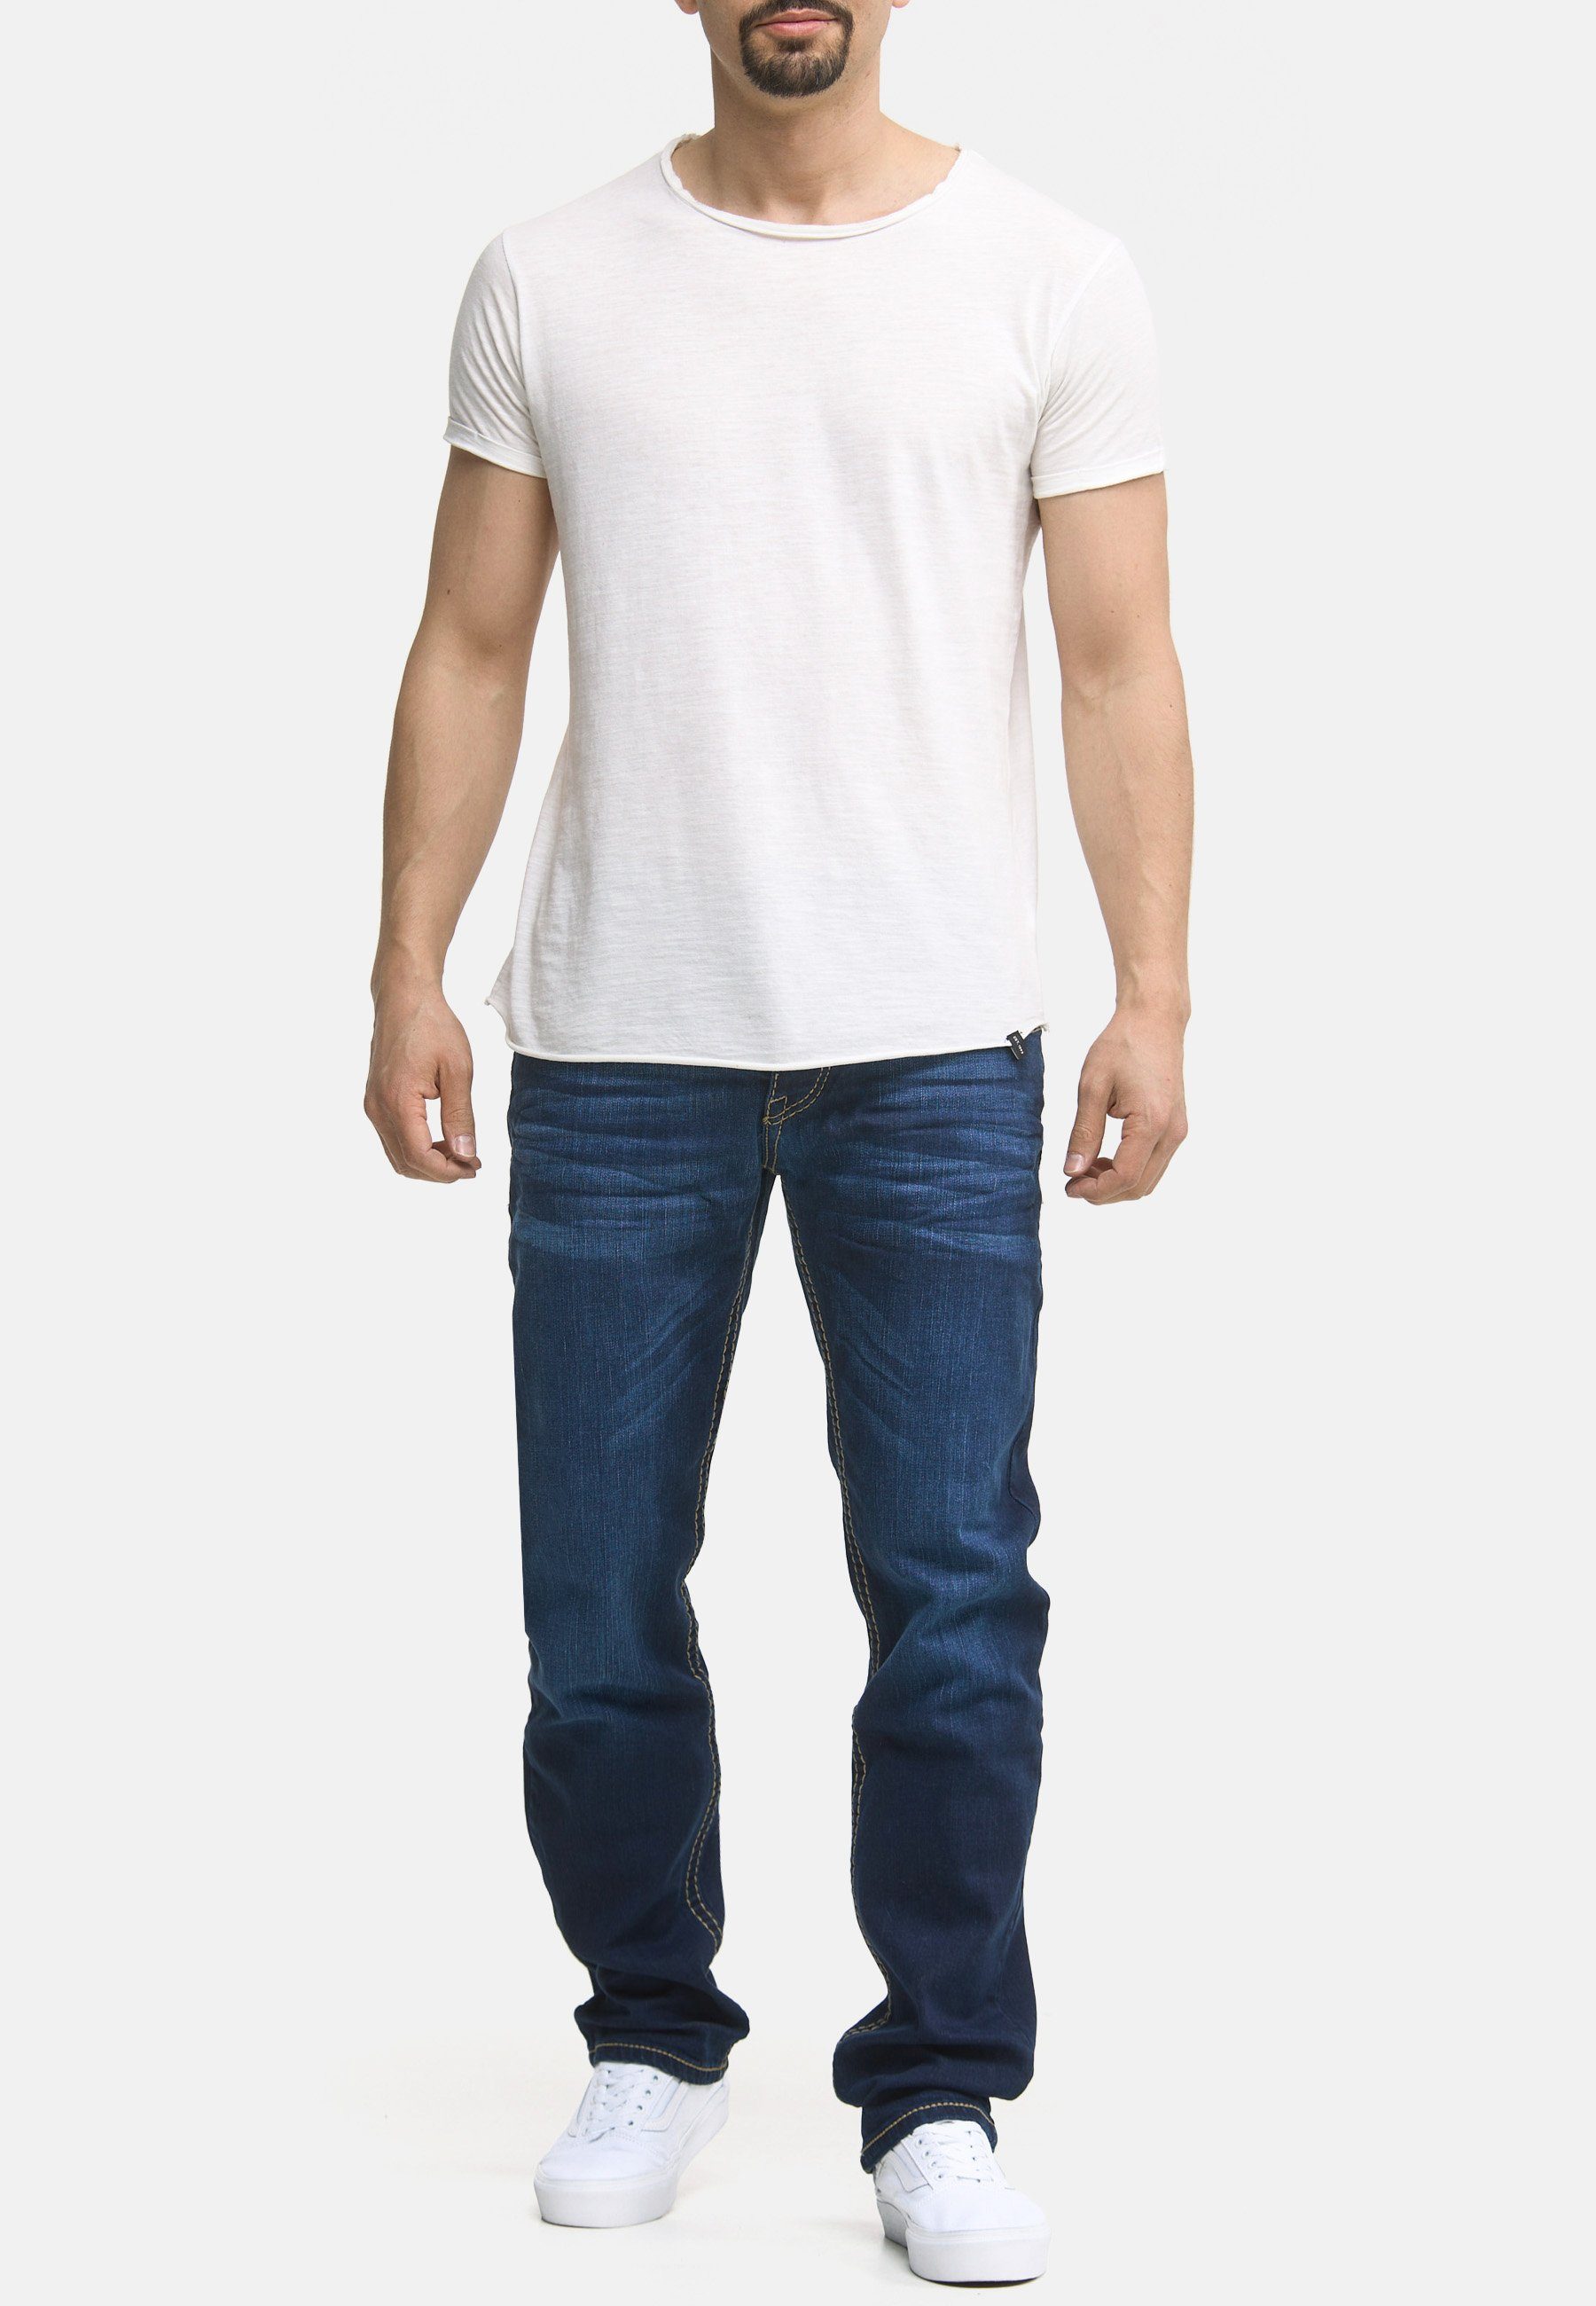 Männer blue Bootcut Regular Regular-fit-Jeans Herren medium Five Fit Denim Hose Code47 Pocket Jeans 905 Code47